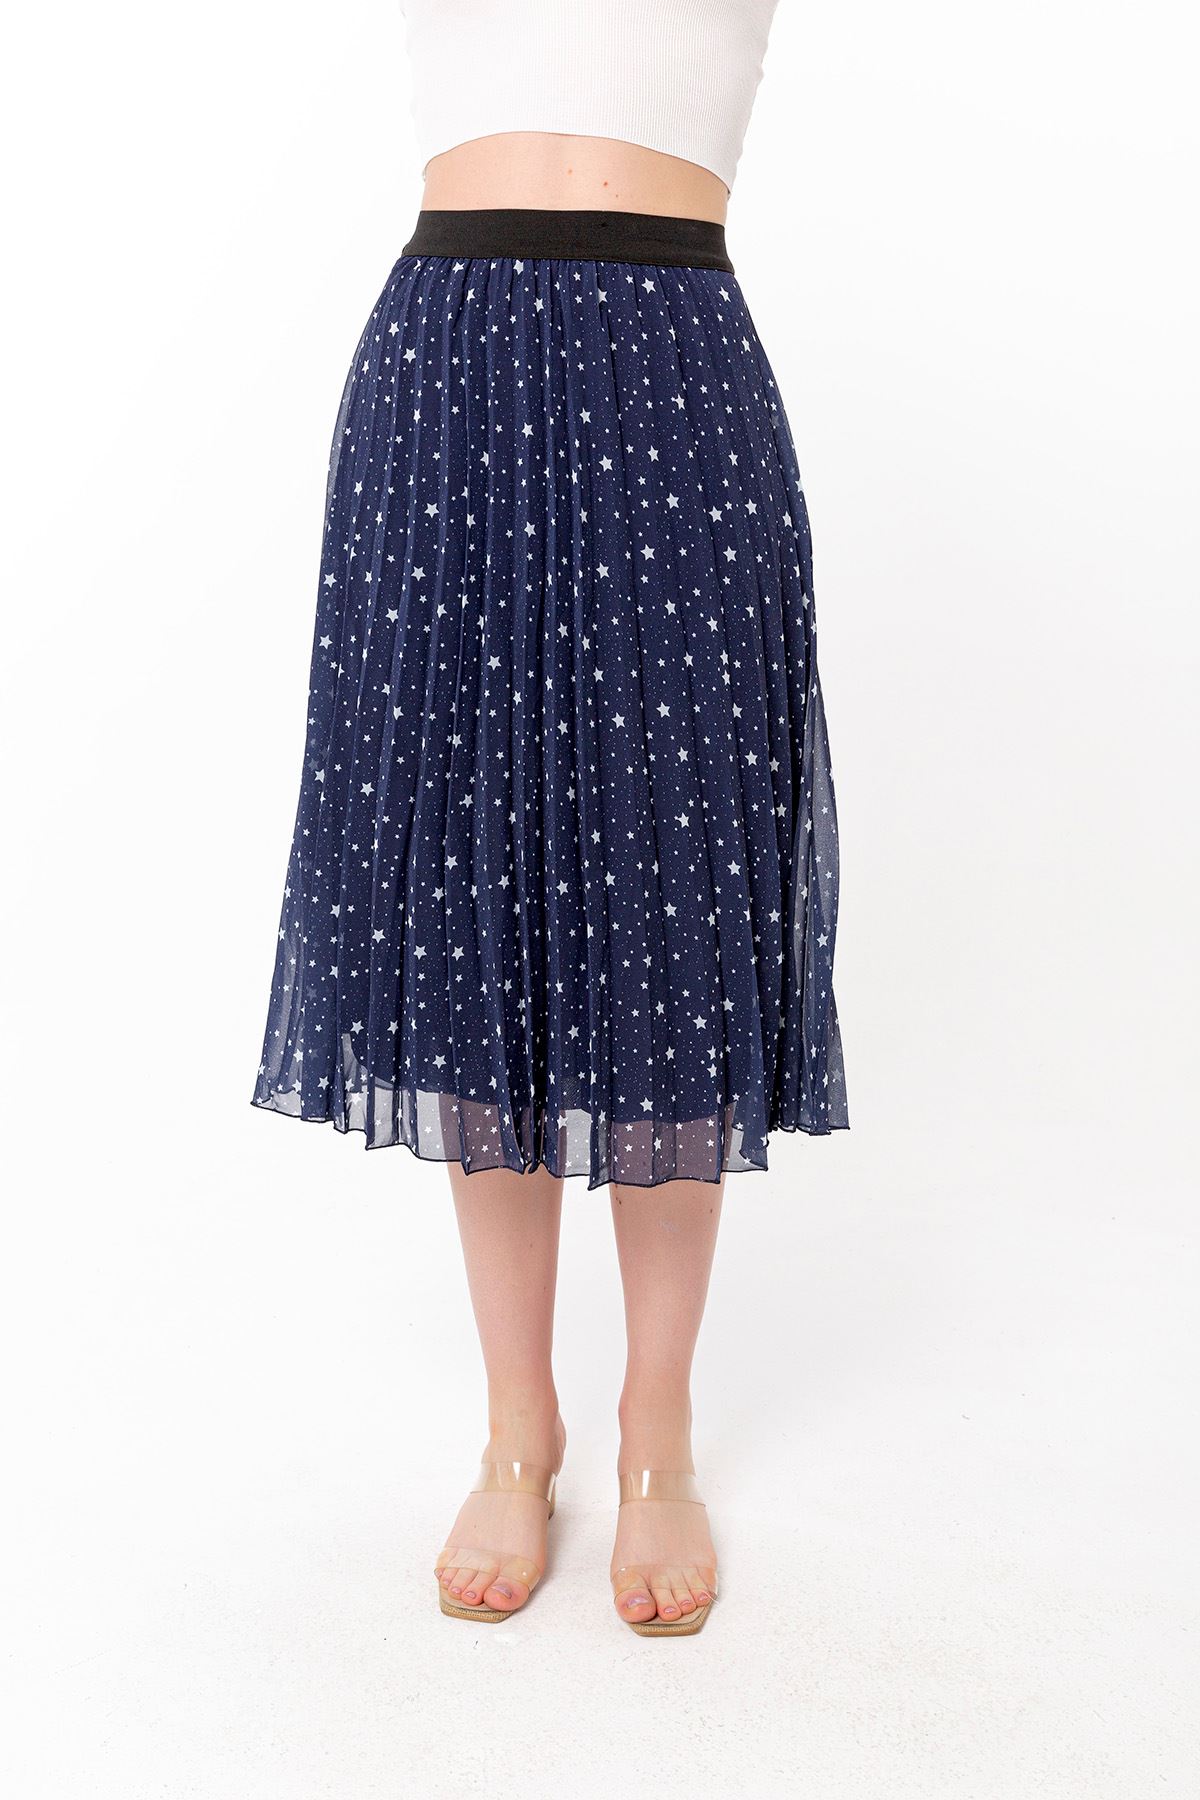 Chiffon Fabric Midi Comfy Fit Star Print Women'S Skirt - Navy Blue 